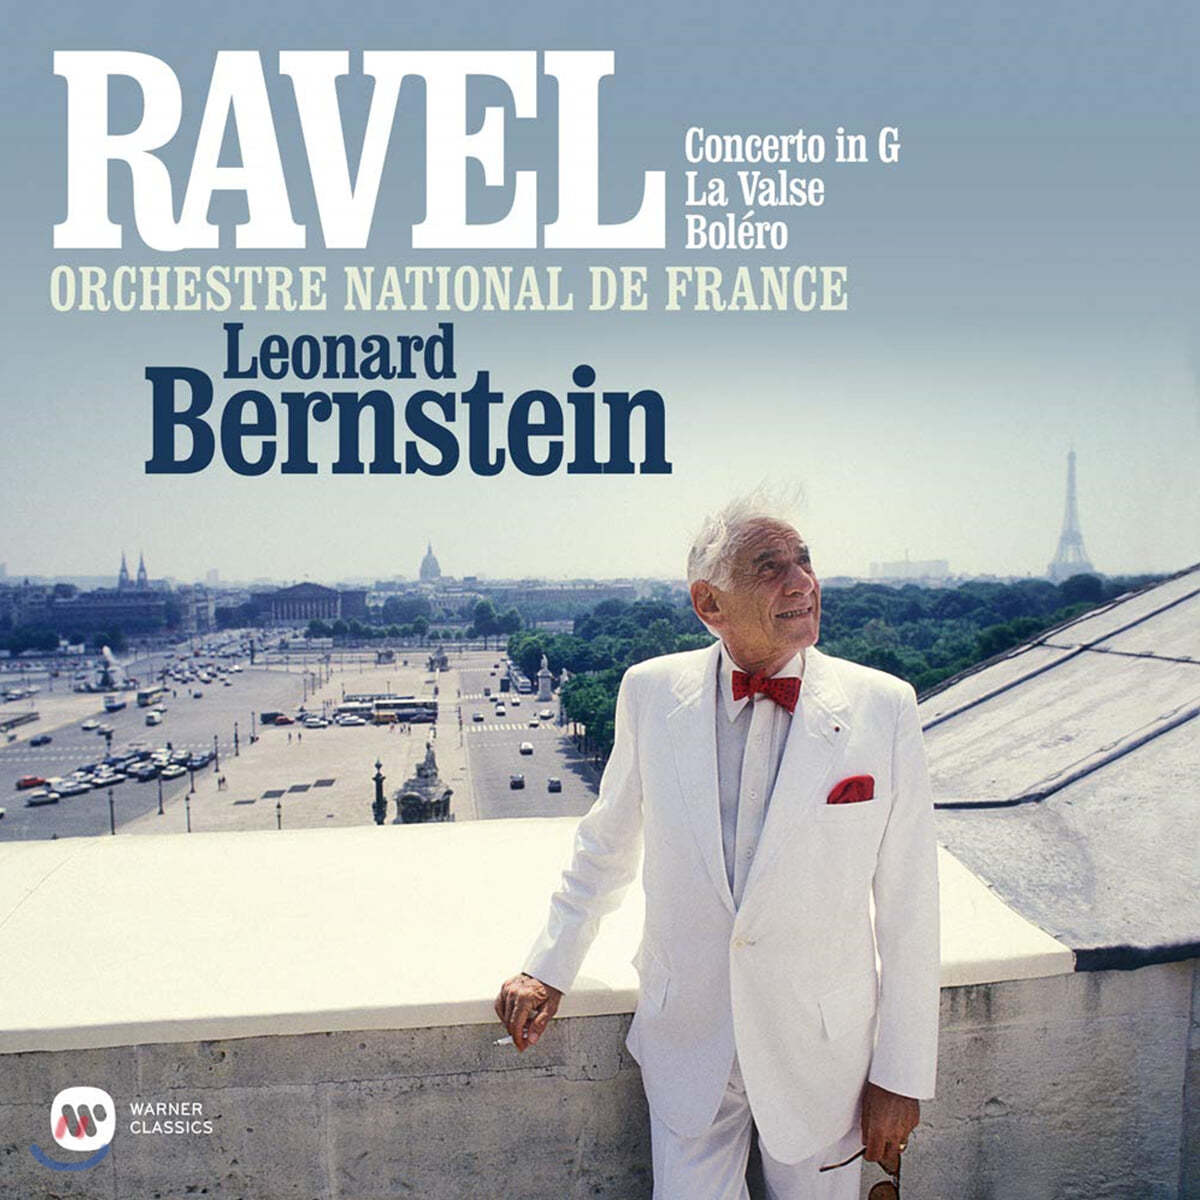 Leonard Bernstein 라벨: 피아노 협주곡, 라발스, 볼레로 (Ravel: Piano Concerto, La Valse, Bolero) [LP]